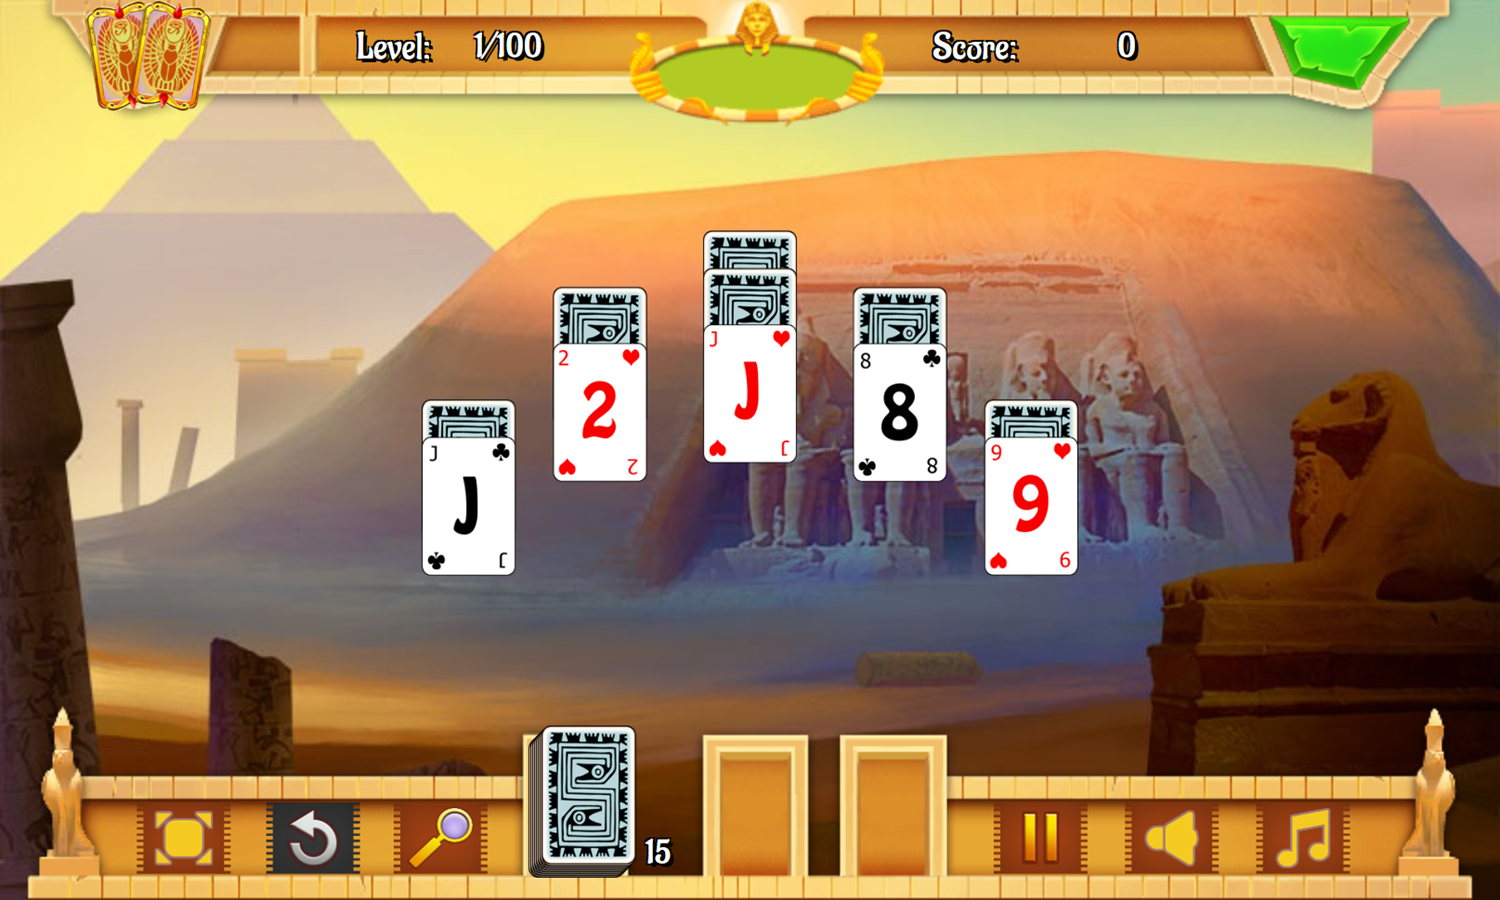 Egypt Solitaire Game Level Start Screenshot.